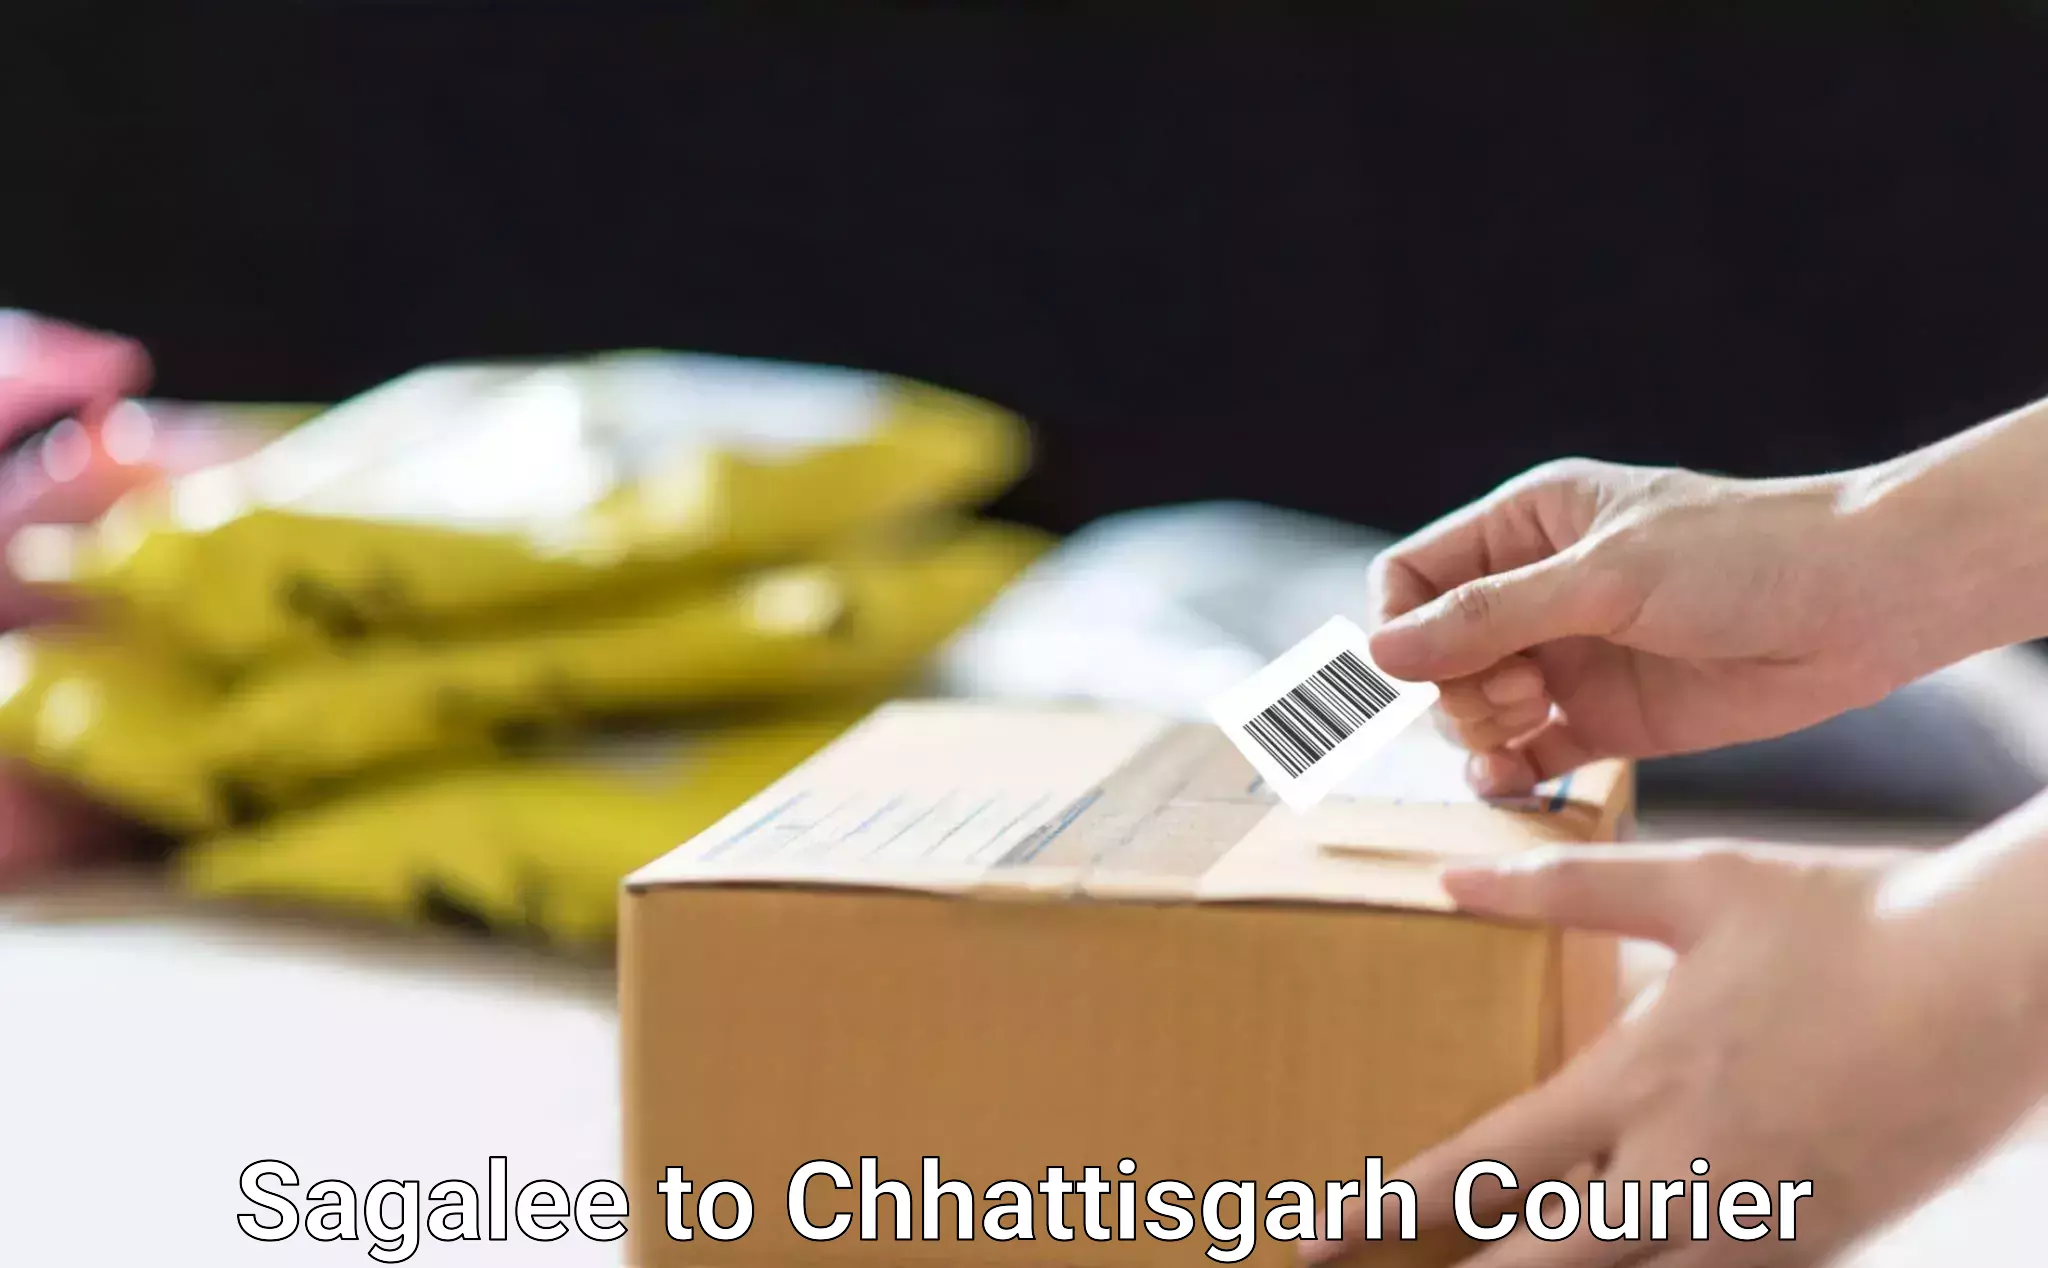 Speedy delivery service Sagalee to Chhattisgarh